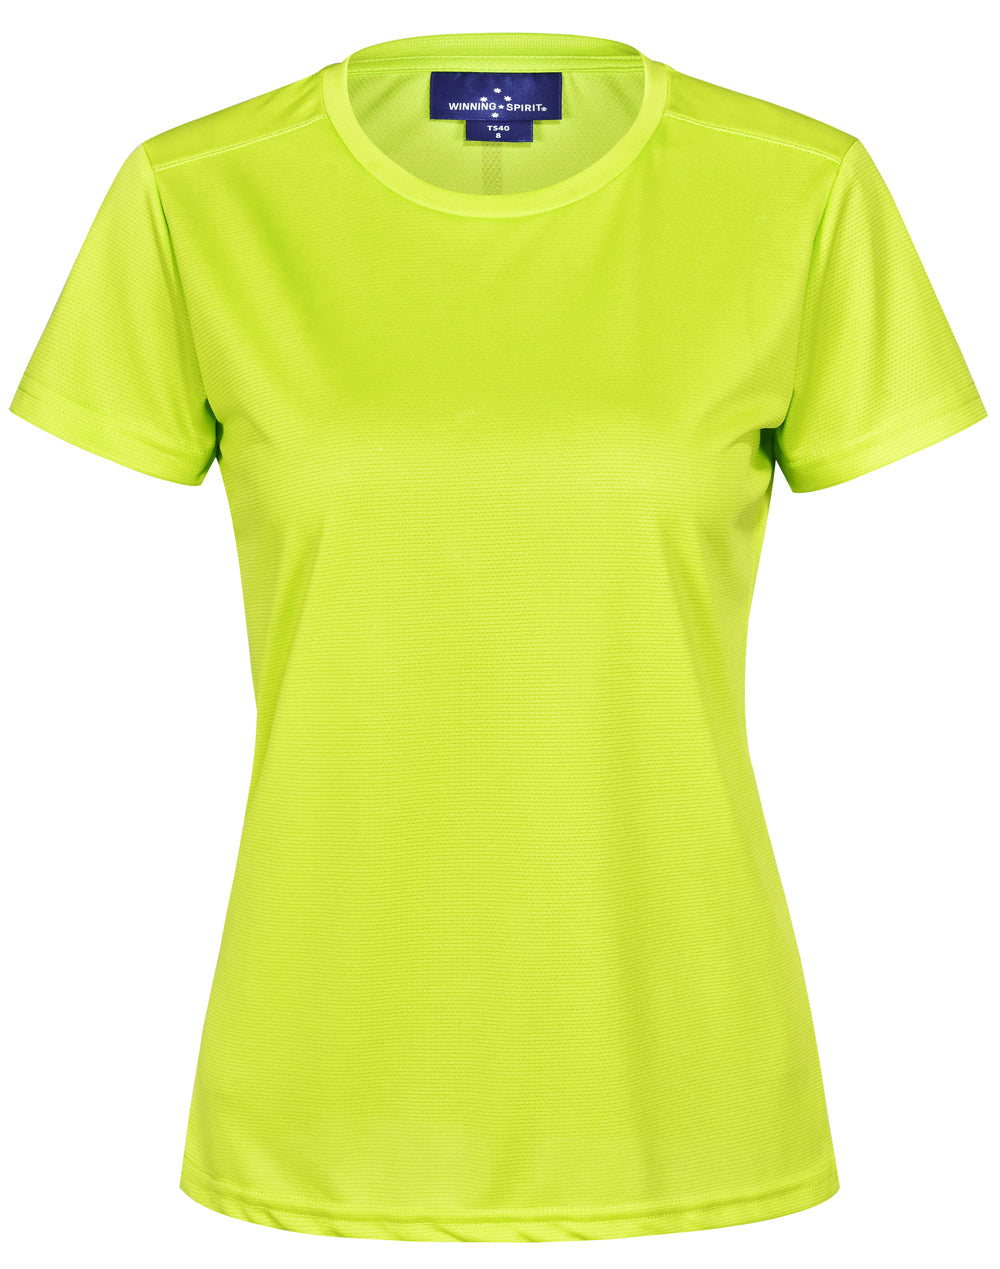 Ladies Rapid Cool TM  Ultra Light Tee Shirt TS40 Casual Wear Winning Spirit Lime Green 6 